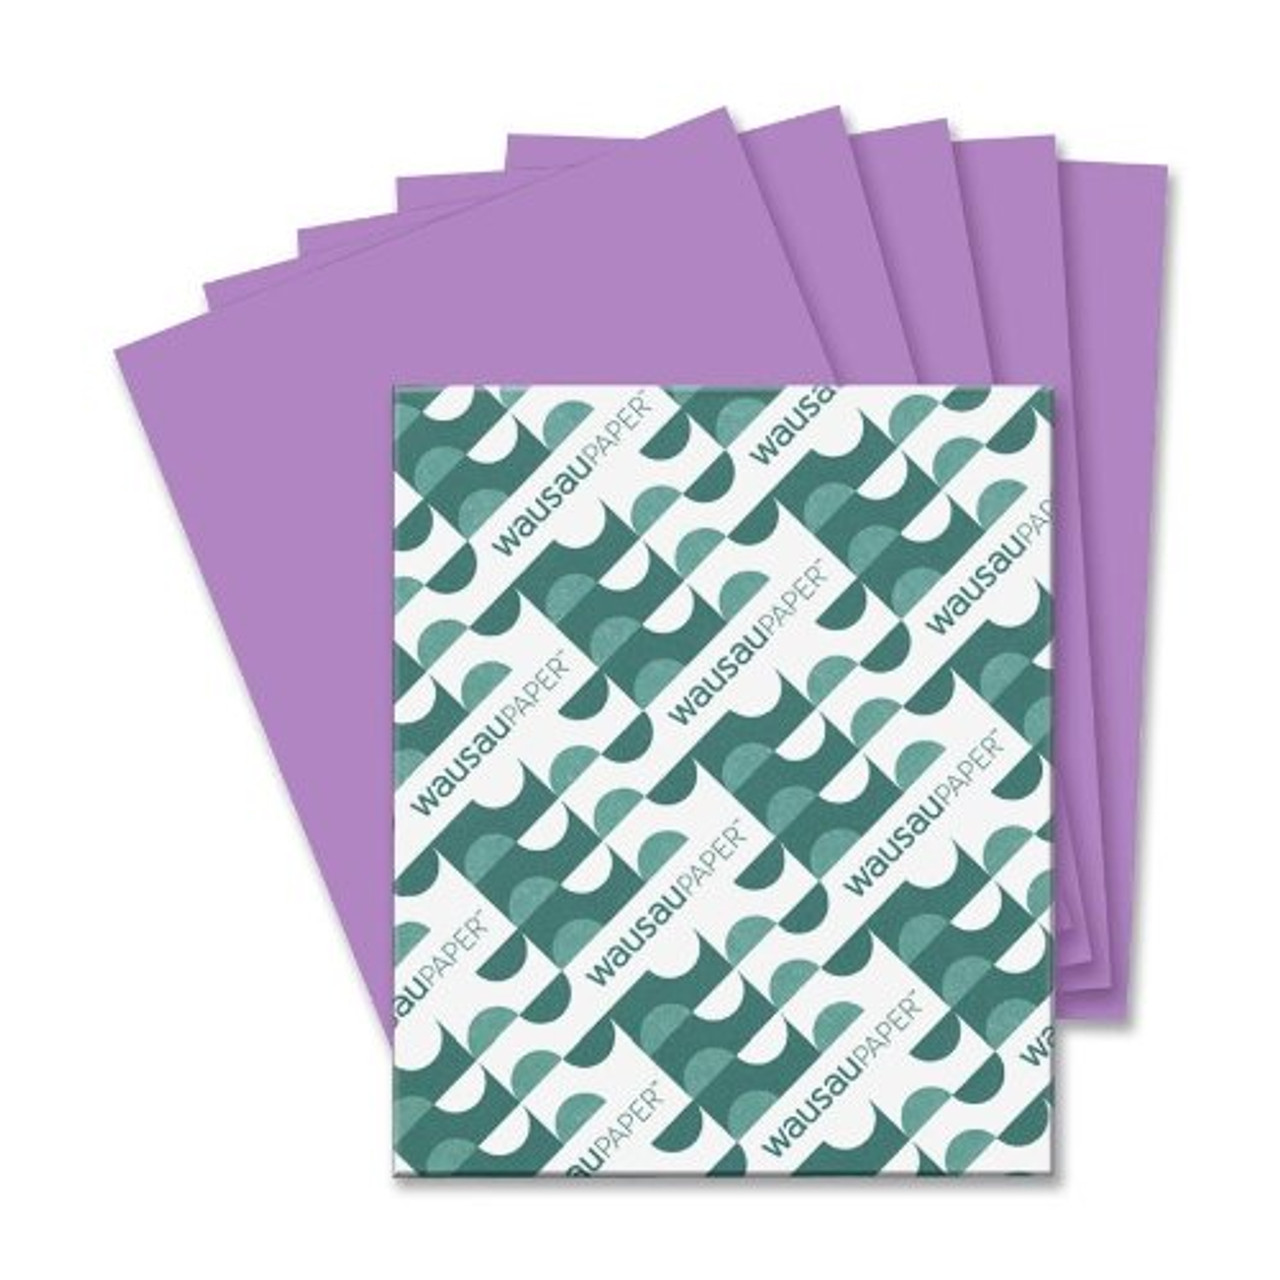 Astrobrights Color Paper, 24 lb, 8.5 x 11, Assorted Colors, 500/Ream